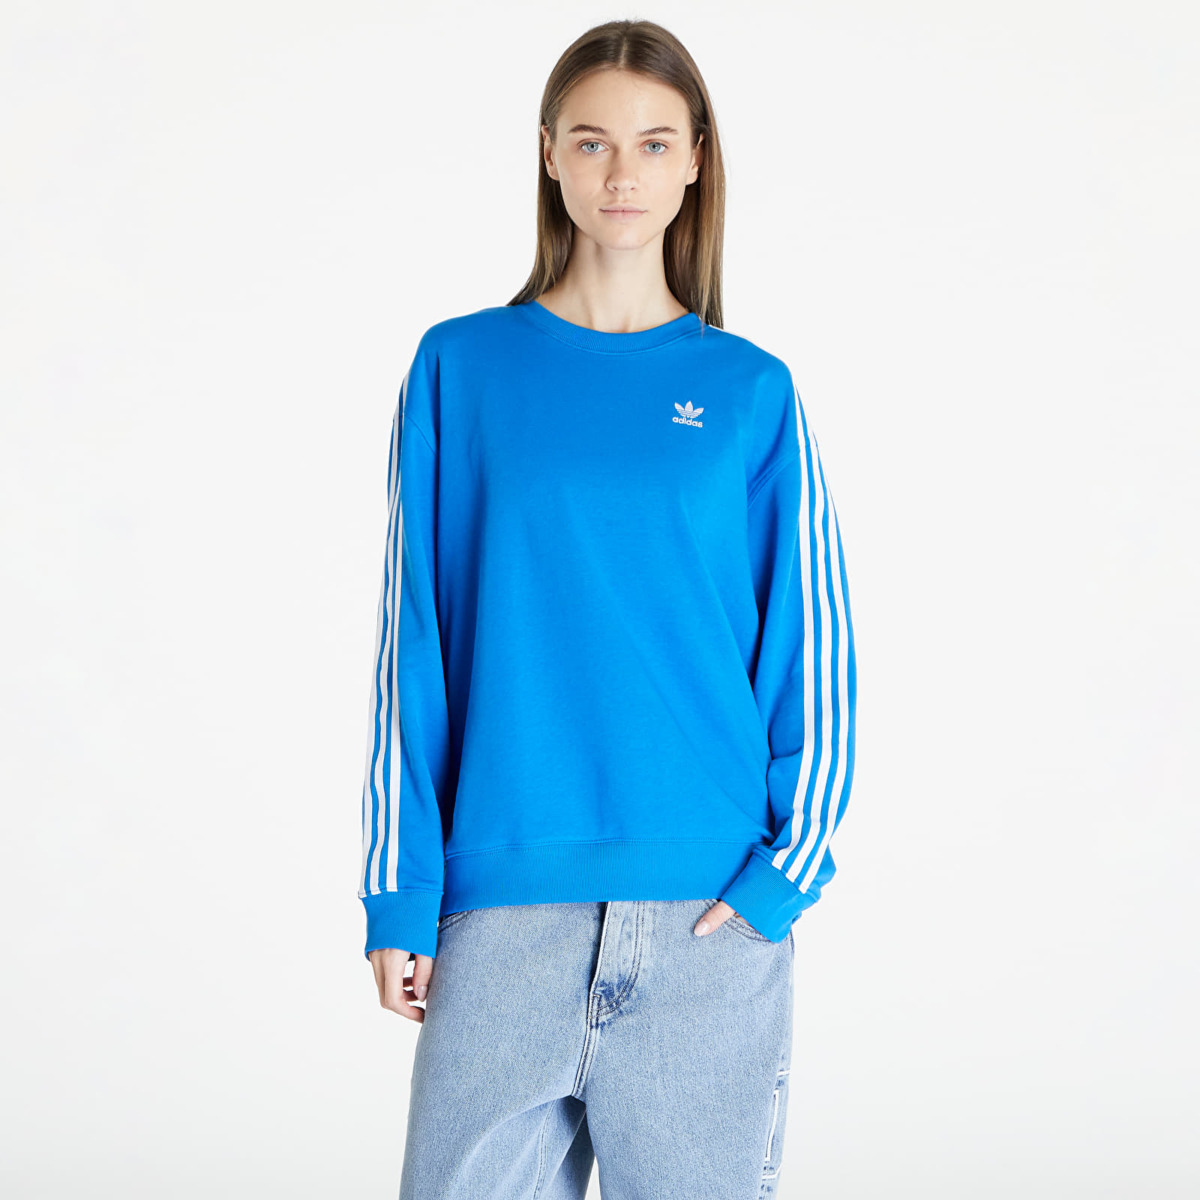 Footshop - Ladies Sweatshirt in Blue - Adidas GOOFASH